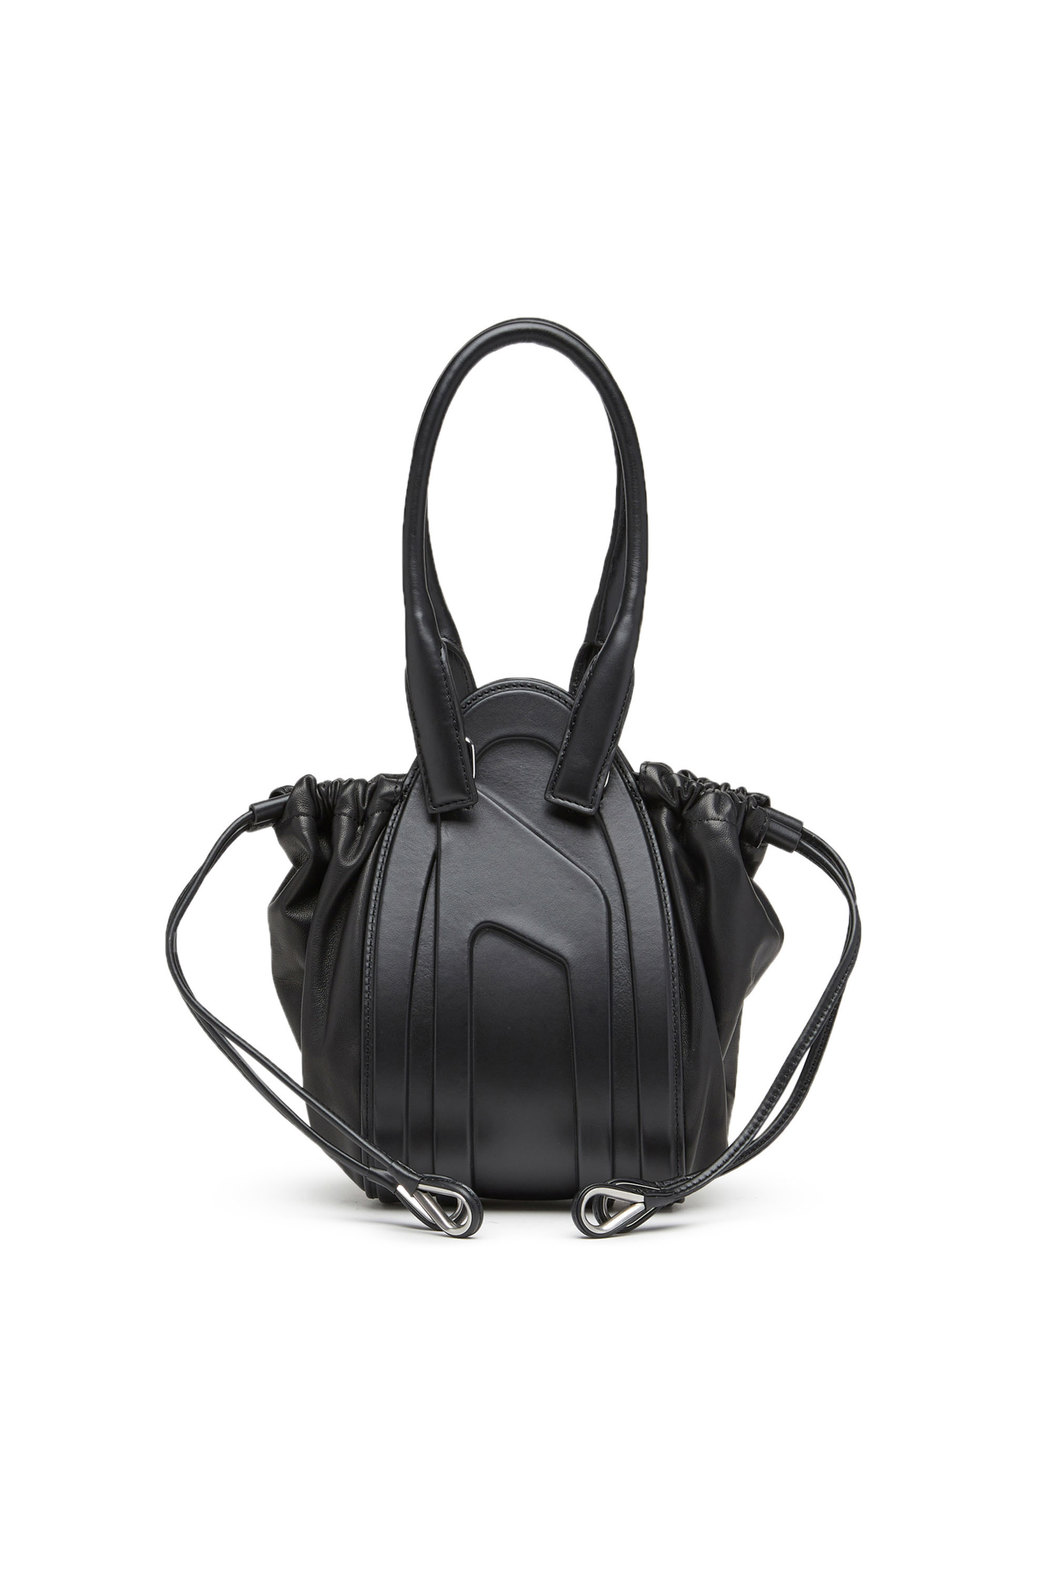 Fold XS - Oval logo handbag in nappa leather